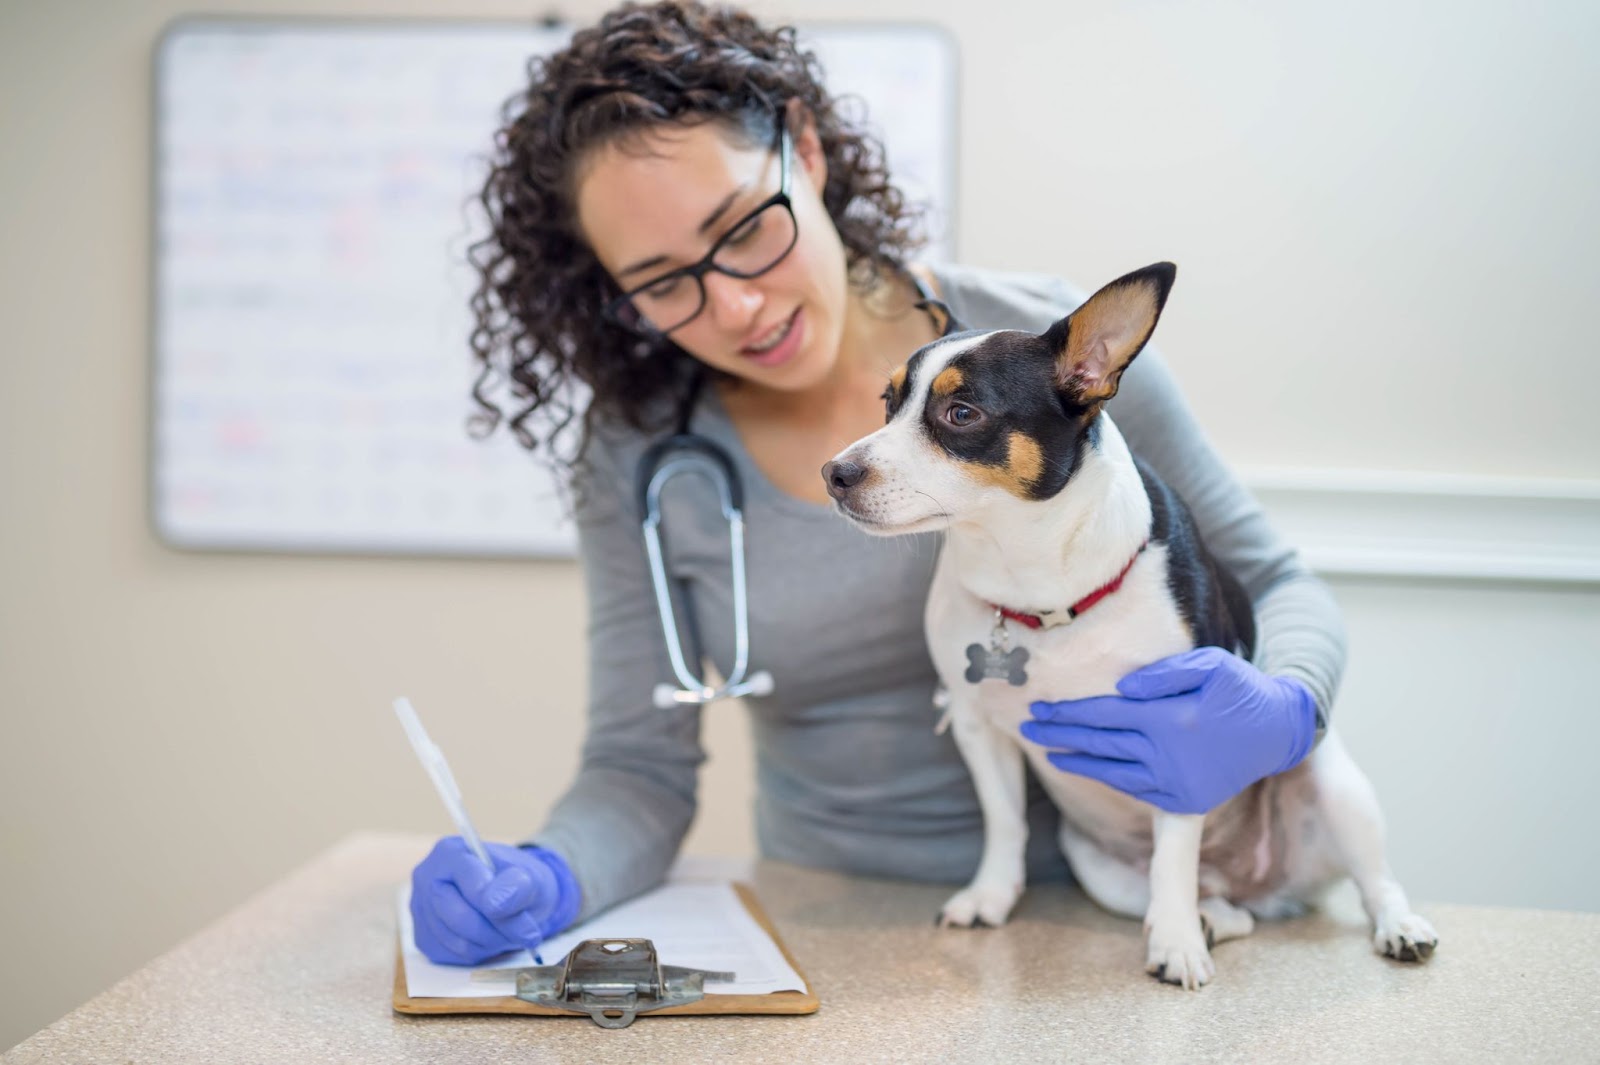 general pet preventative health plan recommendations